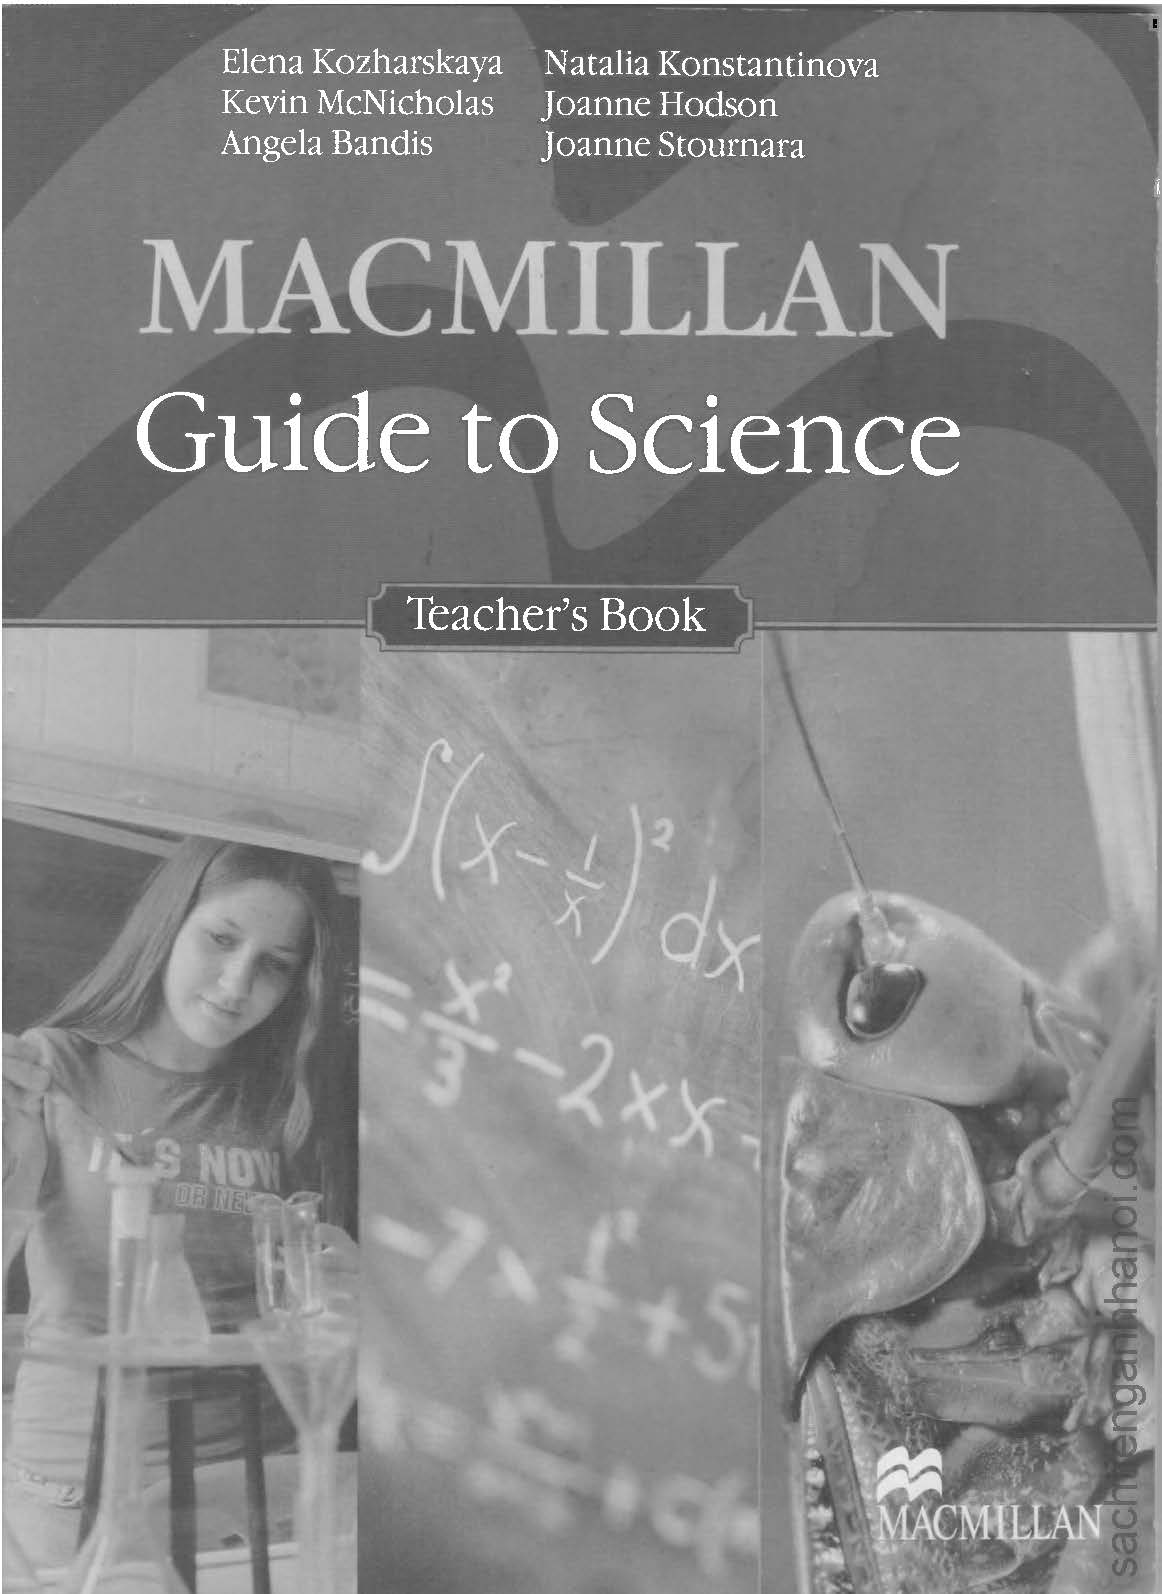 Macmillan s book. Macmillan Guide to Science. Macmillan учебники. Учебник английского Macmillan. Macmillan Guide to Science teacher's book.